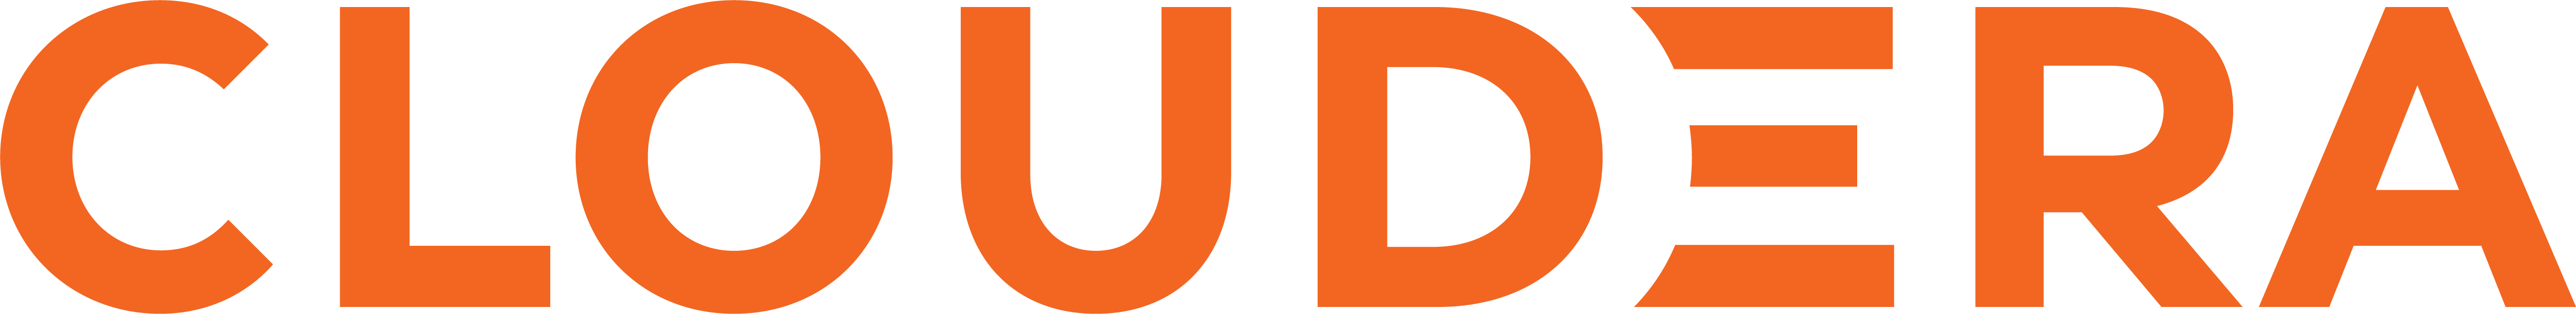 Cloudera Orange Logo